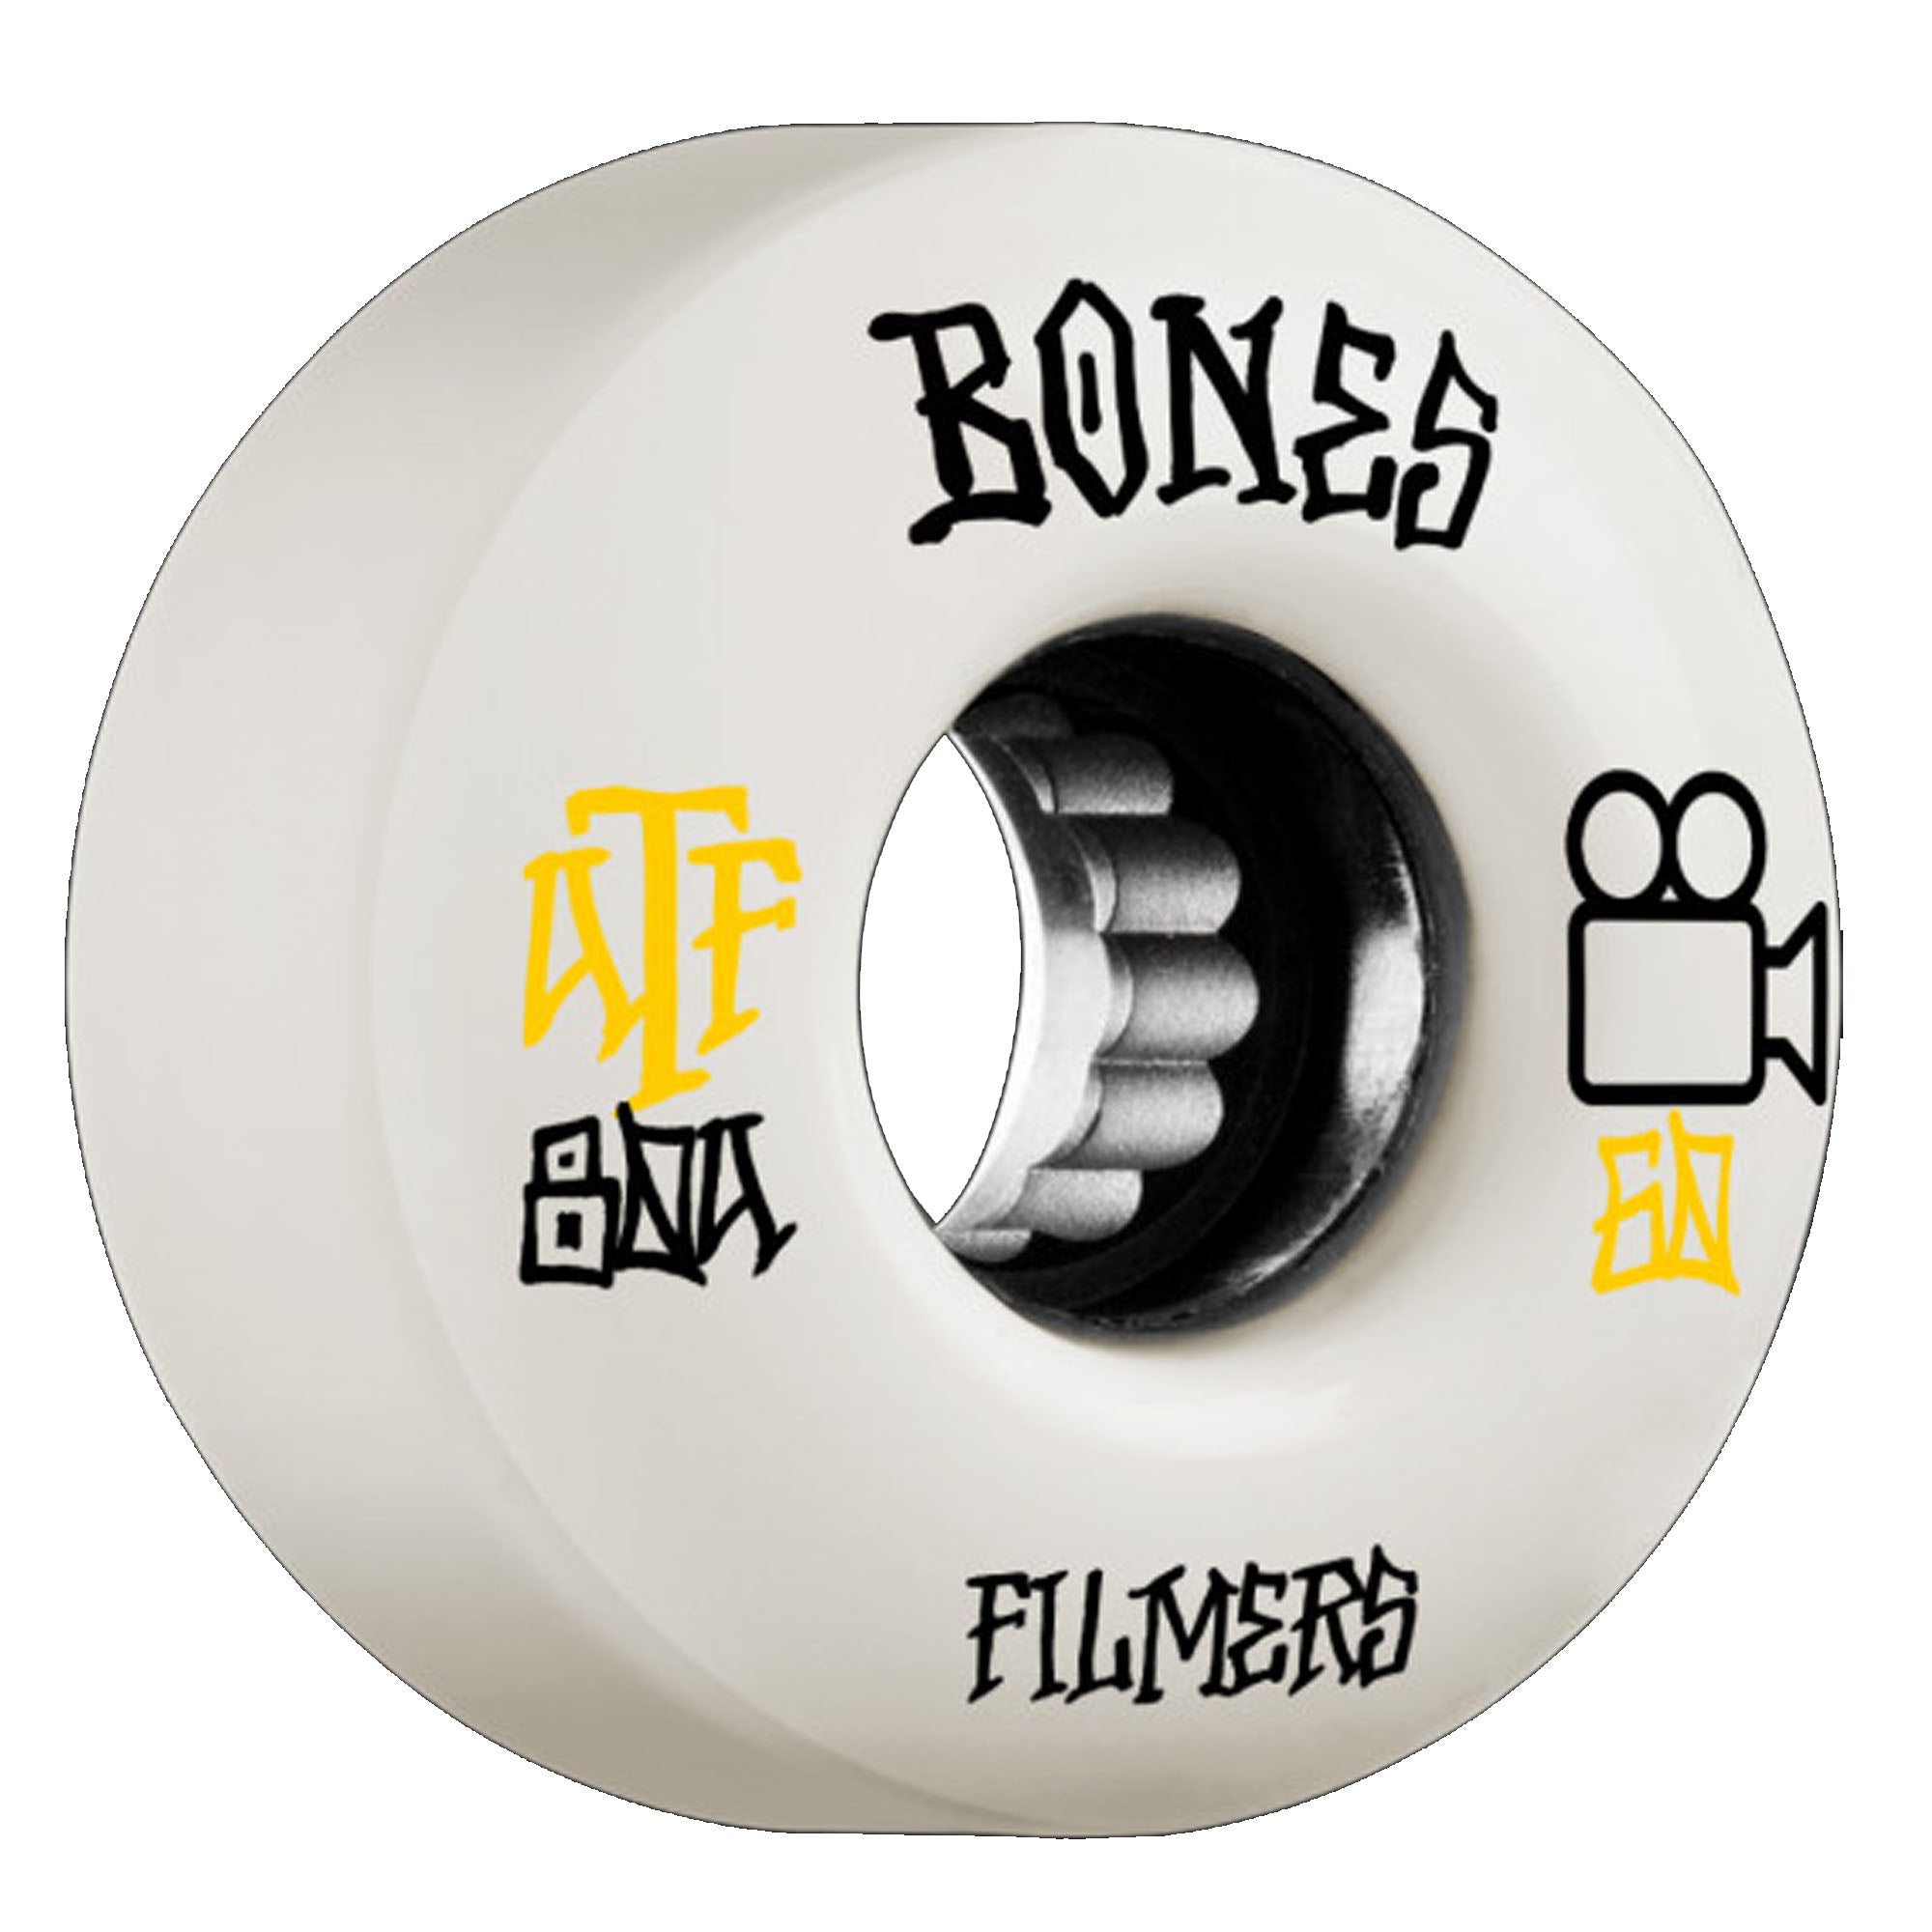 Bones ATF Filmers 60mm 80a Skateboard Wheels